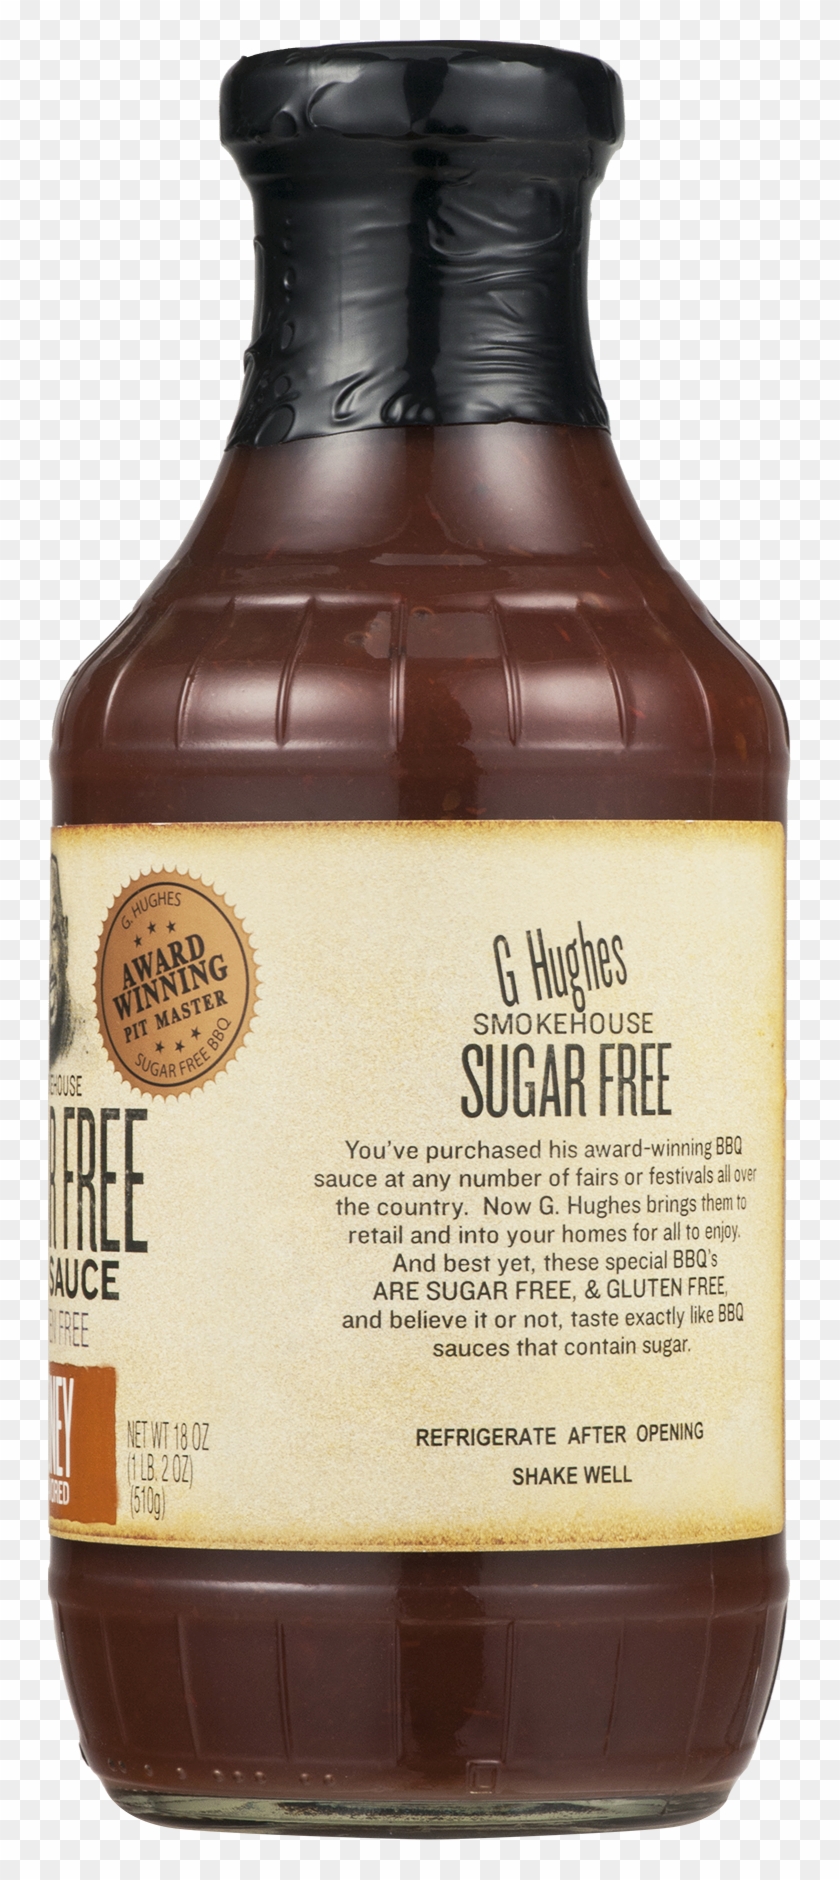 G Hughes Smokehouse Sugar Free Honey Flavored Bbq Sauce, - G Hughes Bbq Sauce Clipart #4830847